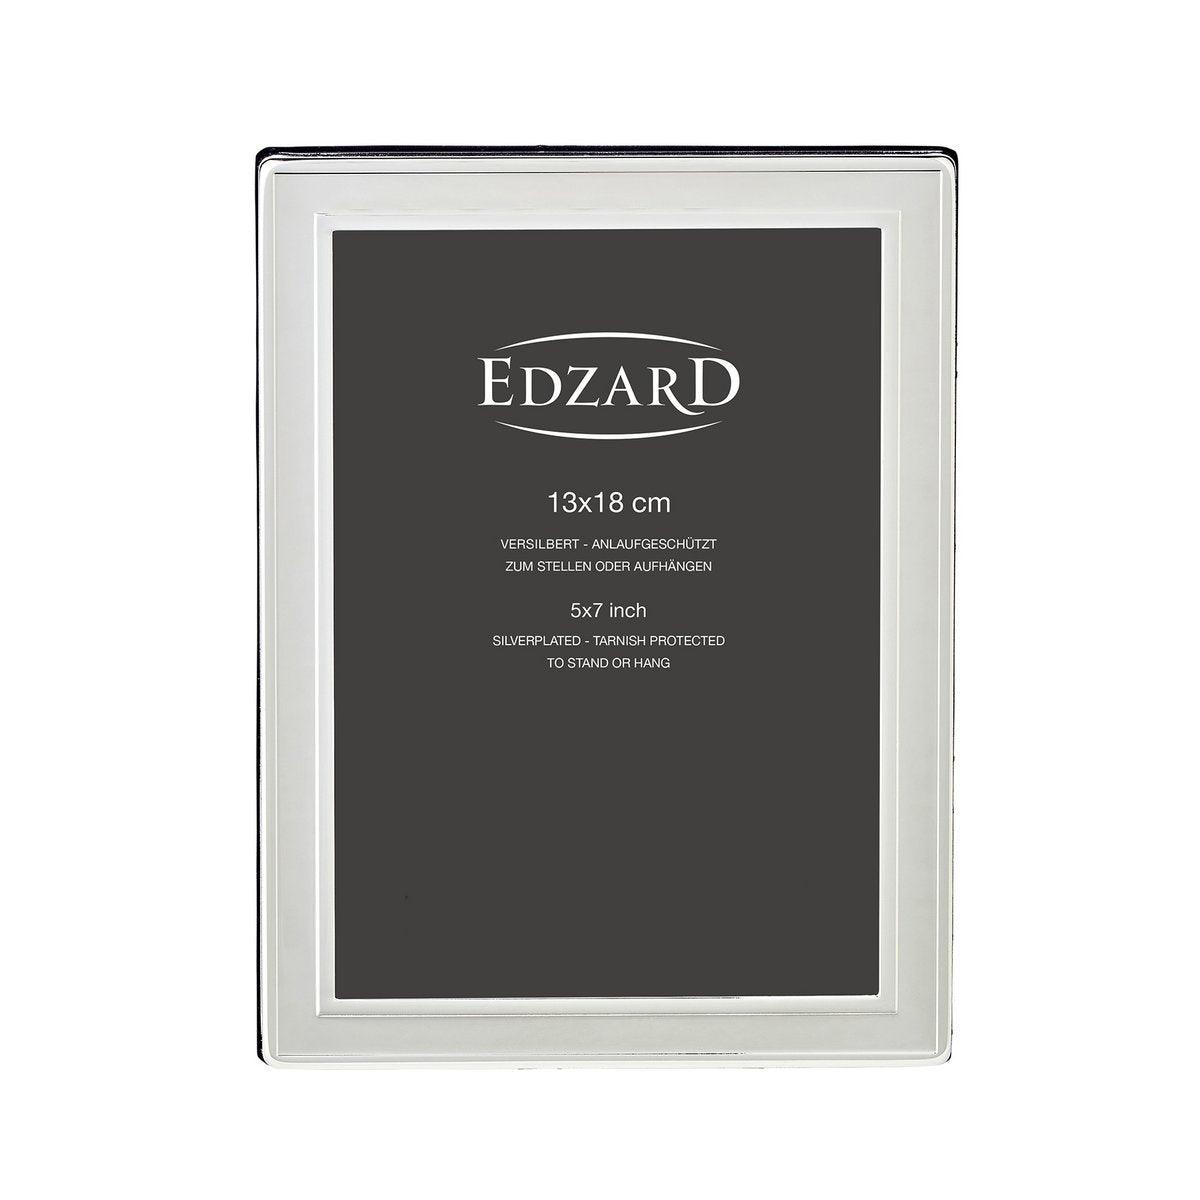 EDZARD Fotorahmen Bilderrahmen Nardo für Foto 13 x 18 cm, edel versilbert, anlaufgeschützt, 2 Aufhänger - HomeDesign Knaus